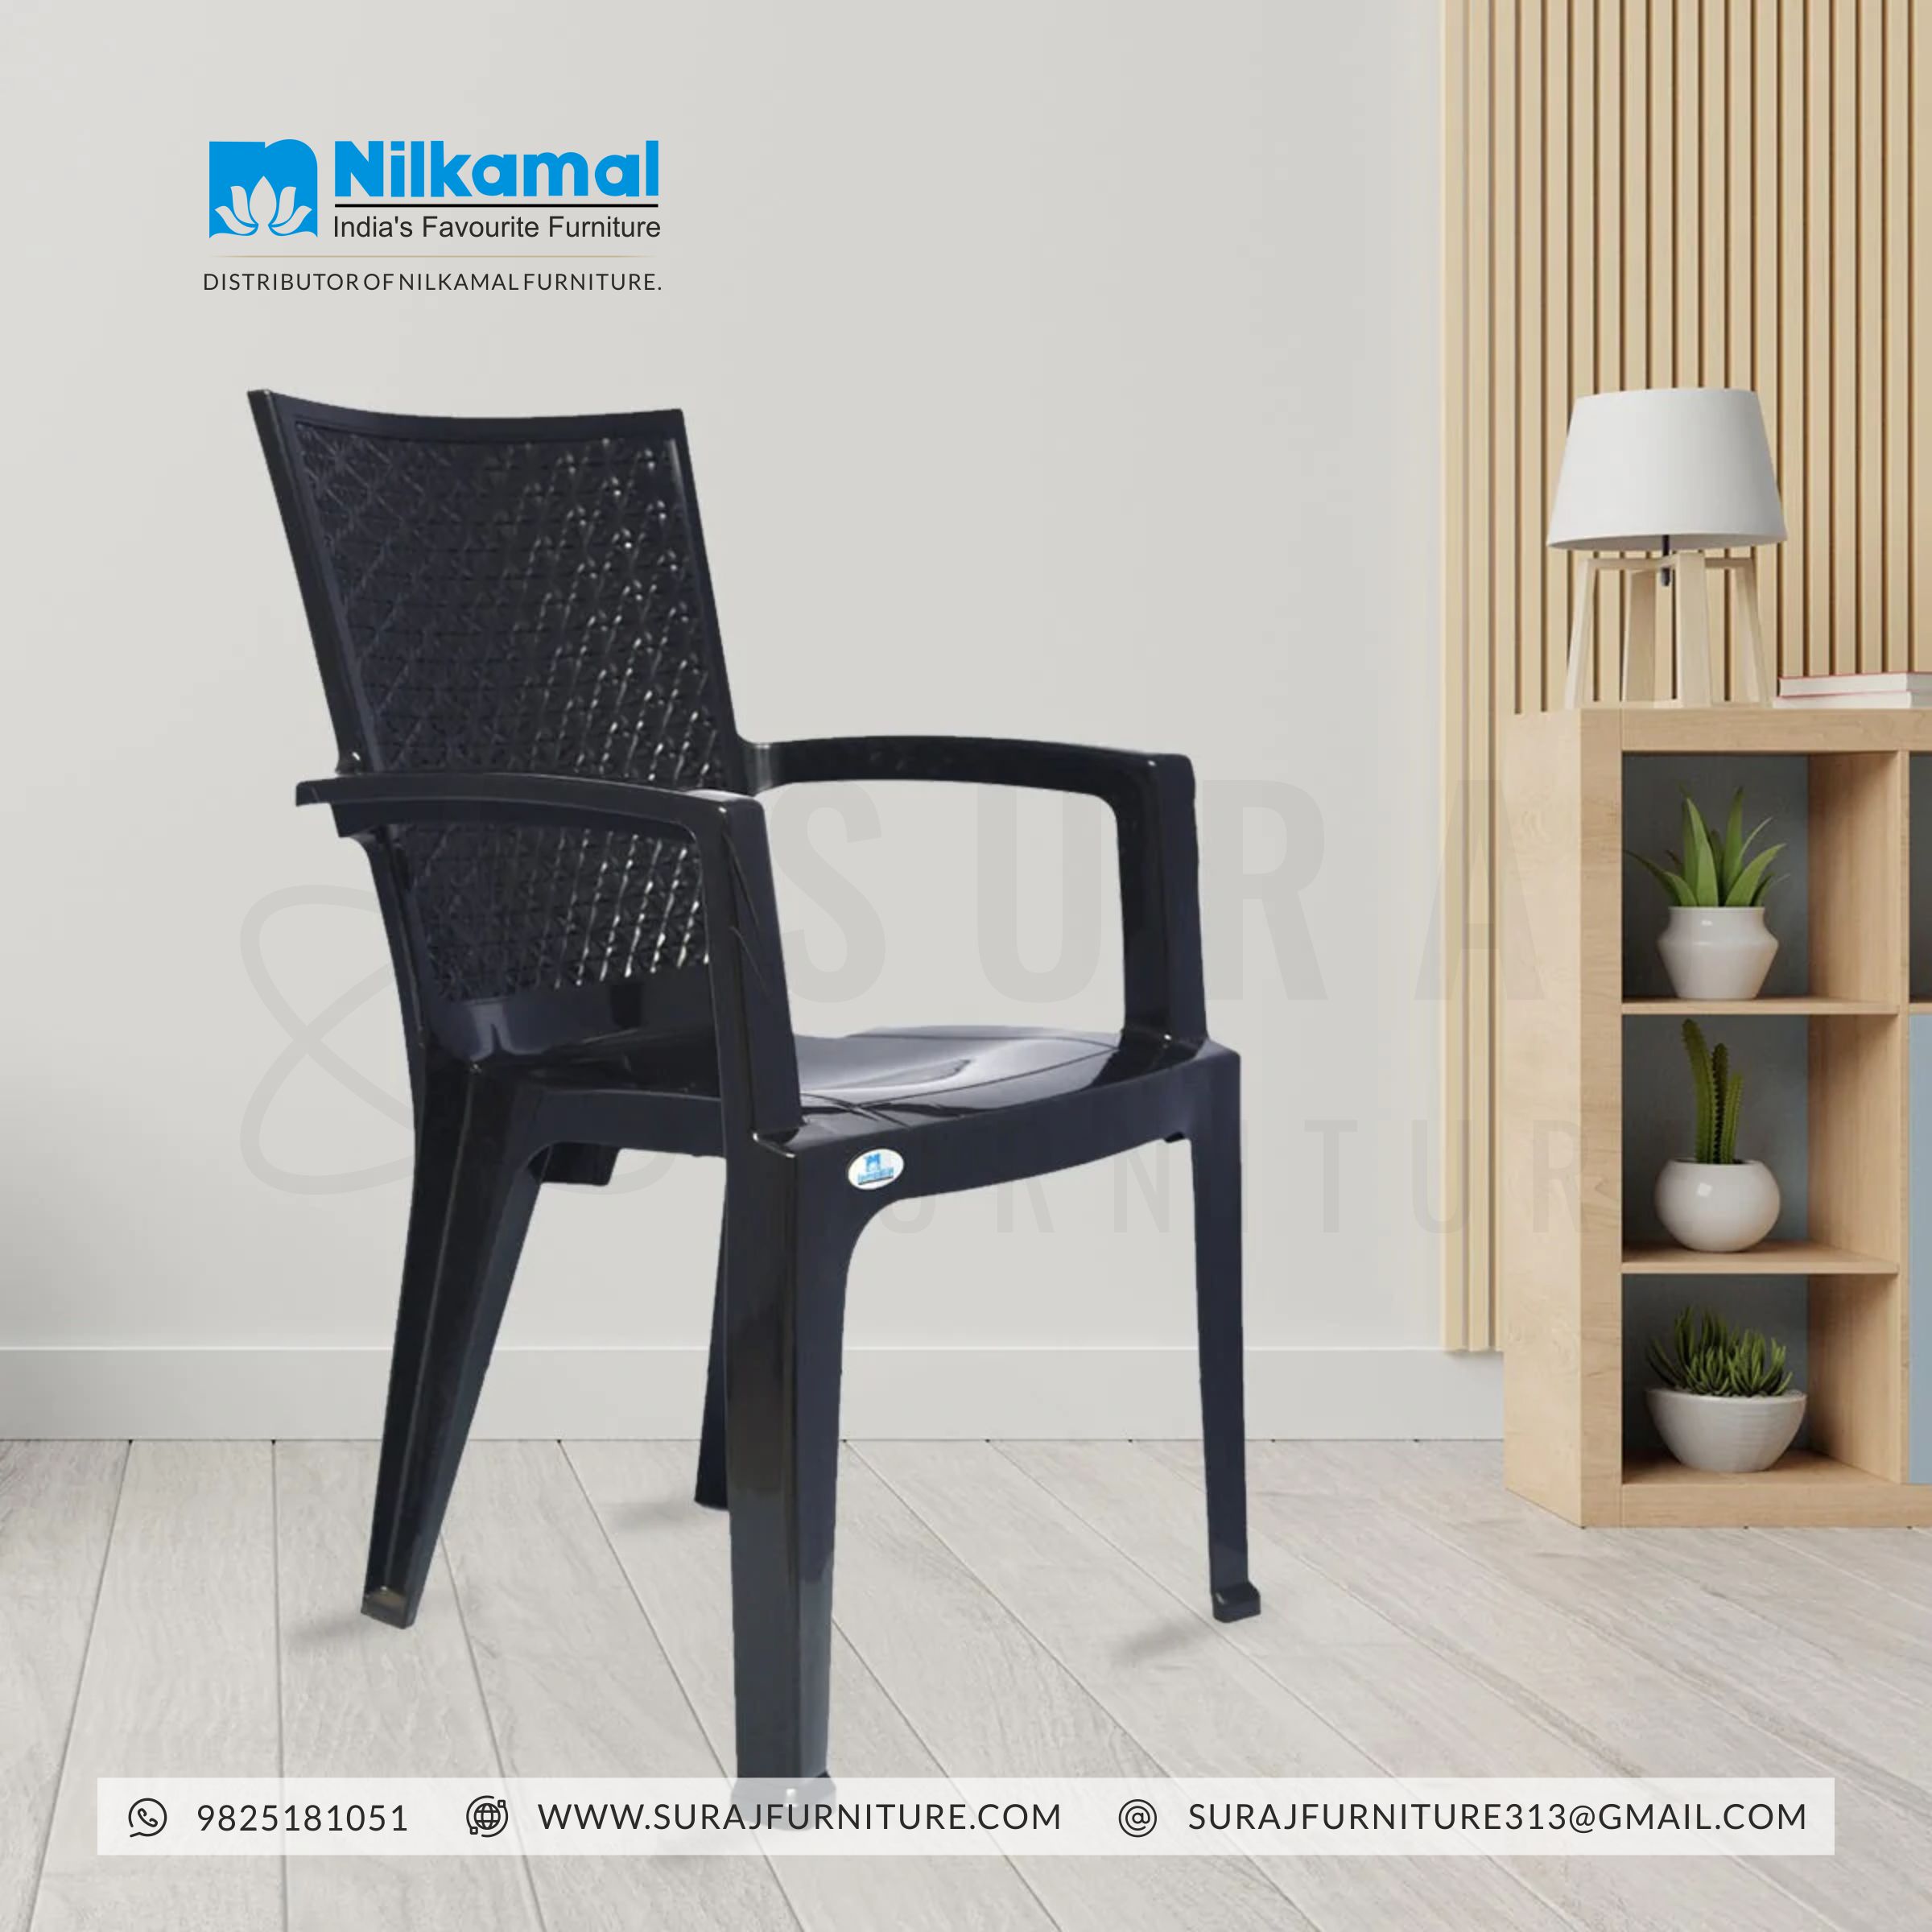 Manufacturer of Nilkamal Chair